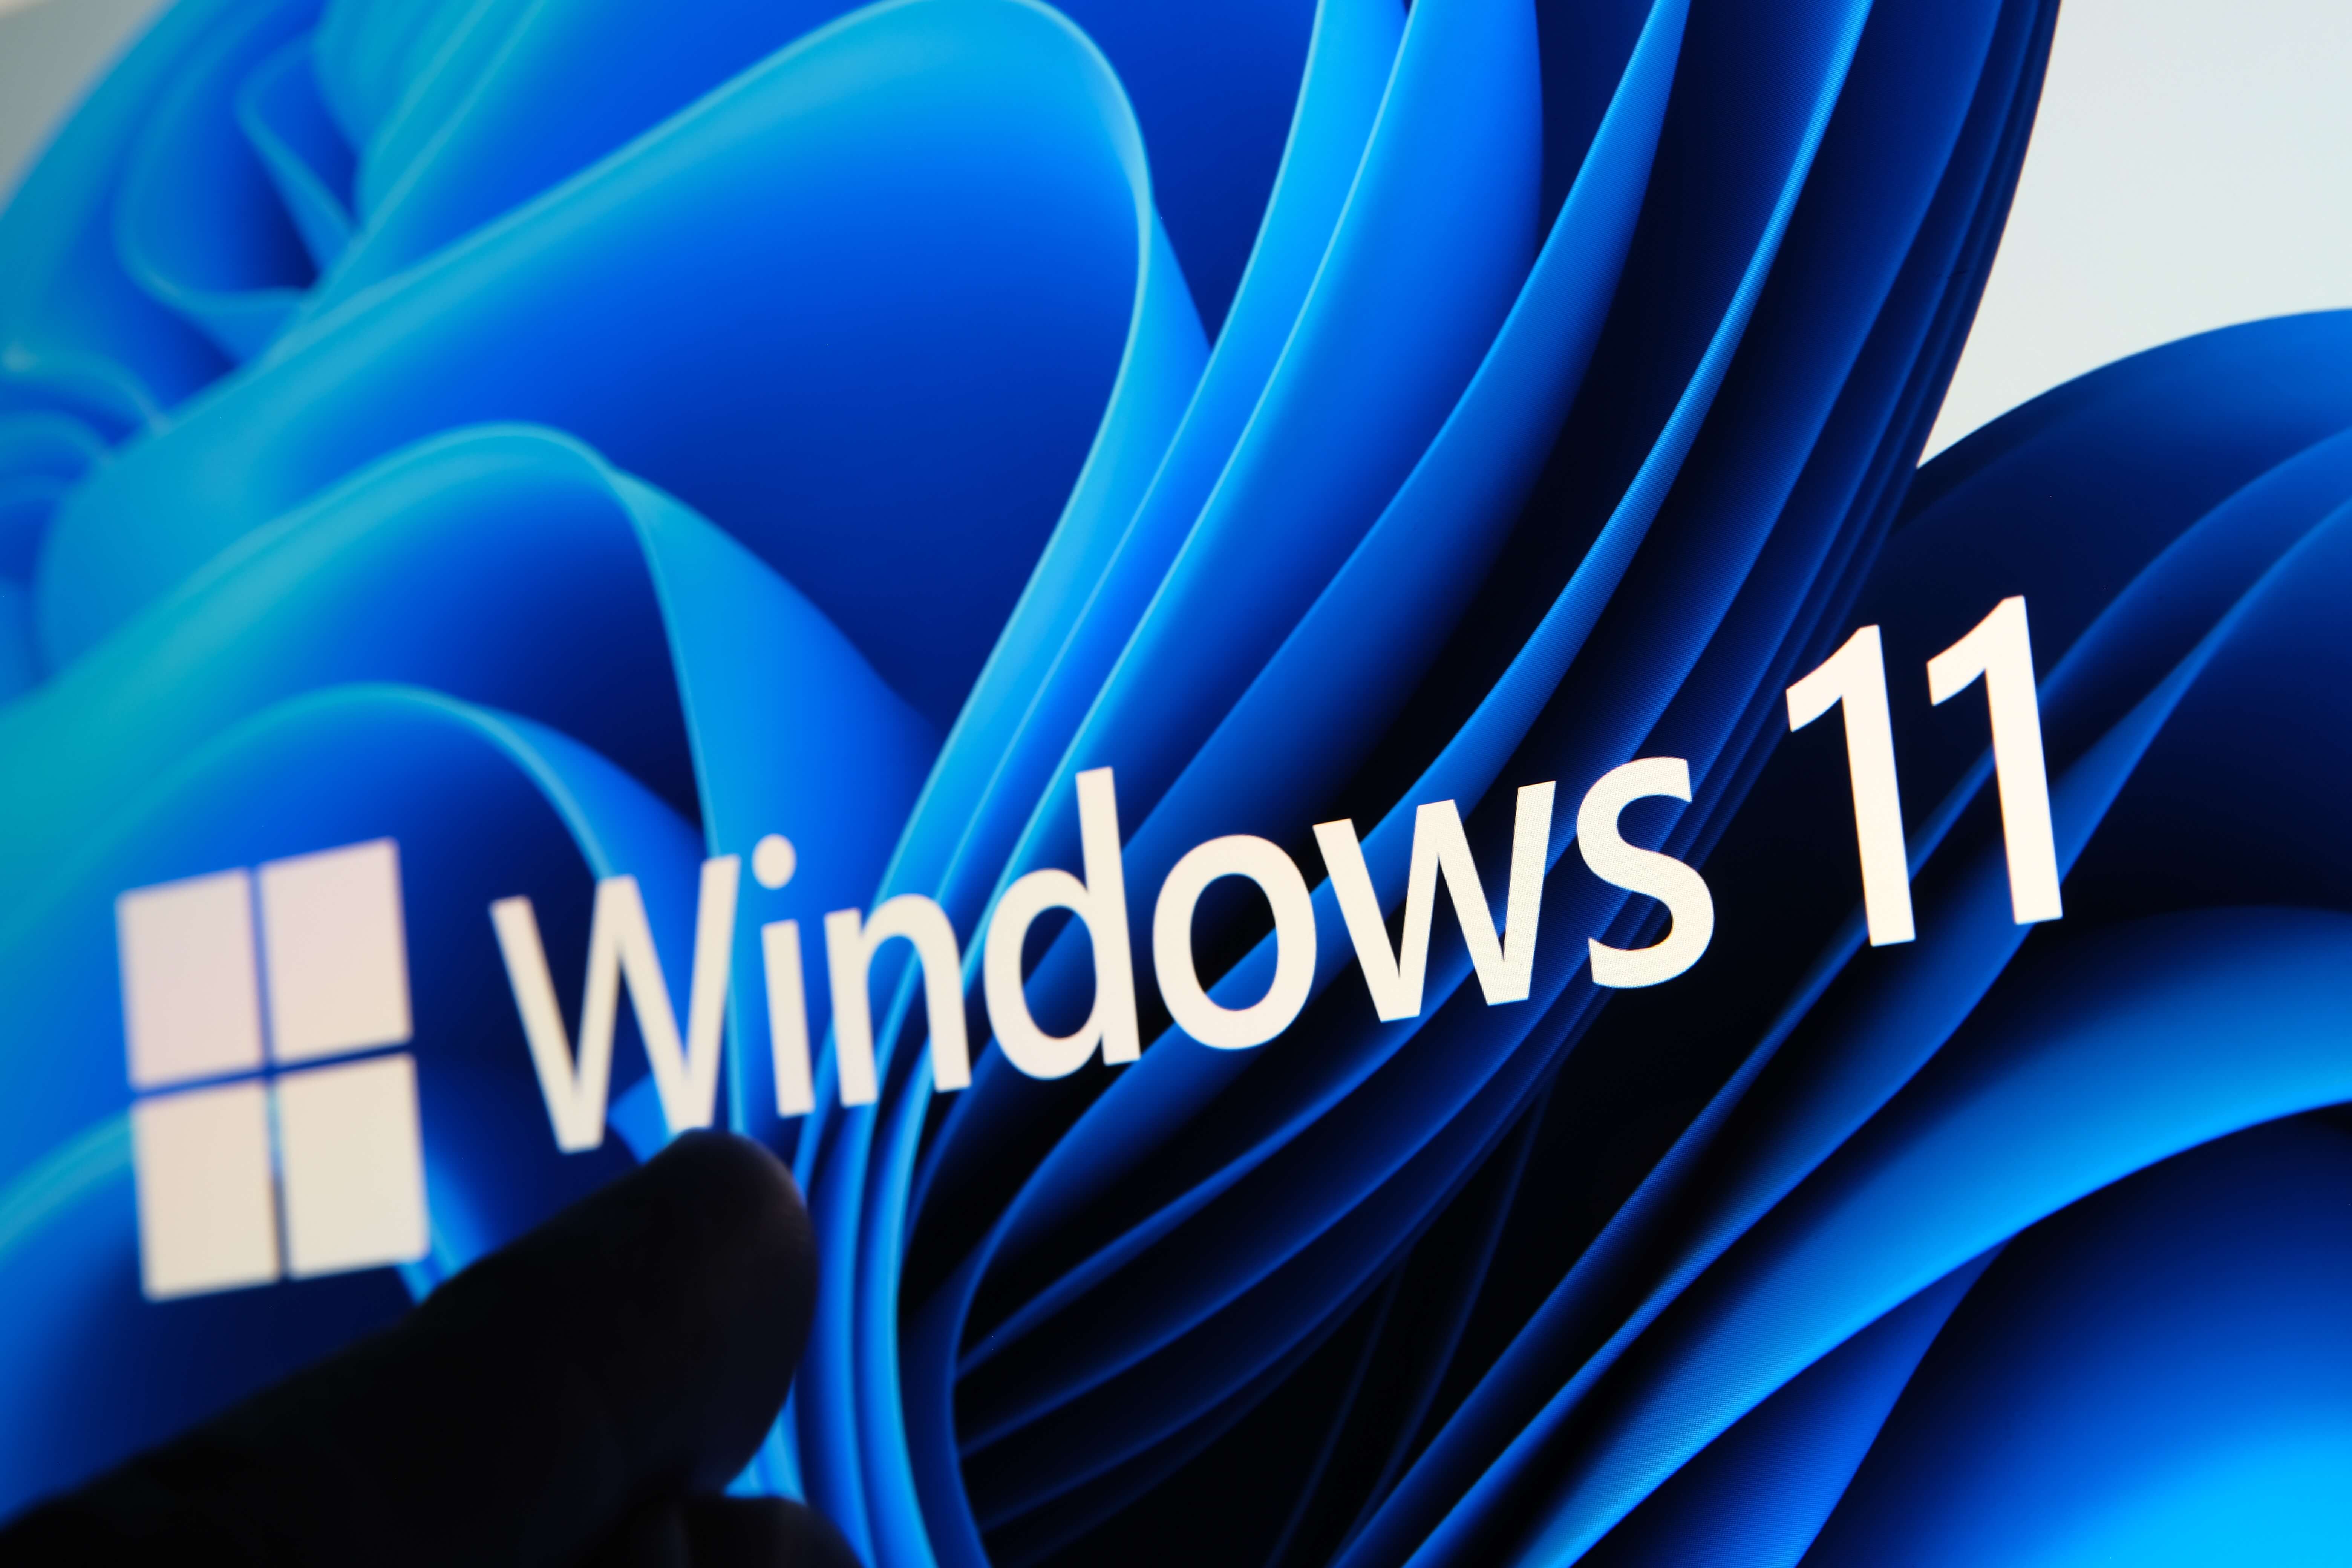 Microsoft Provides Passkeys to Home windows 11 #Imaginations Hub